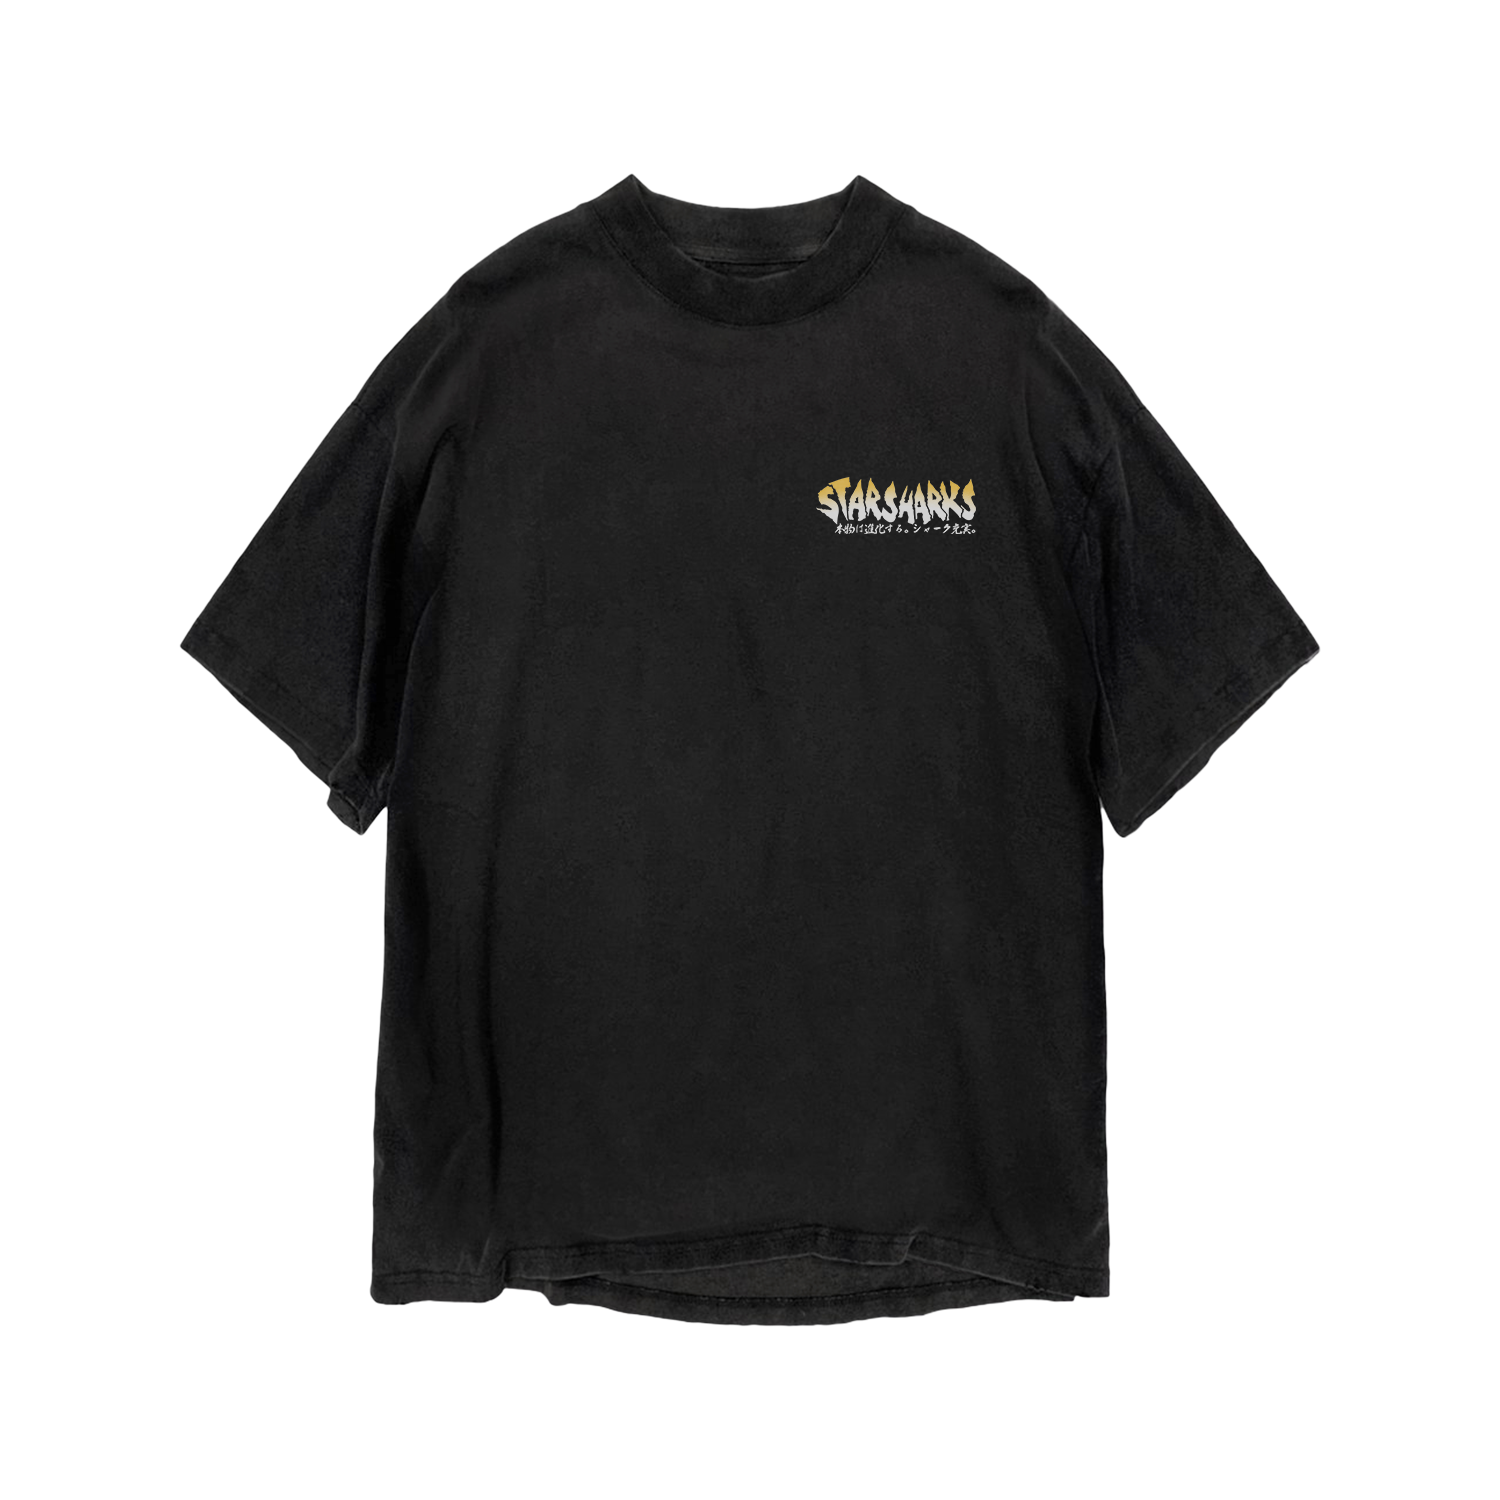 Starshark Gold T-Shirt